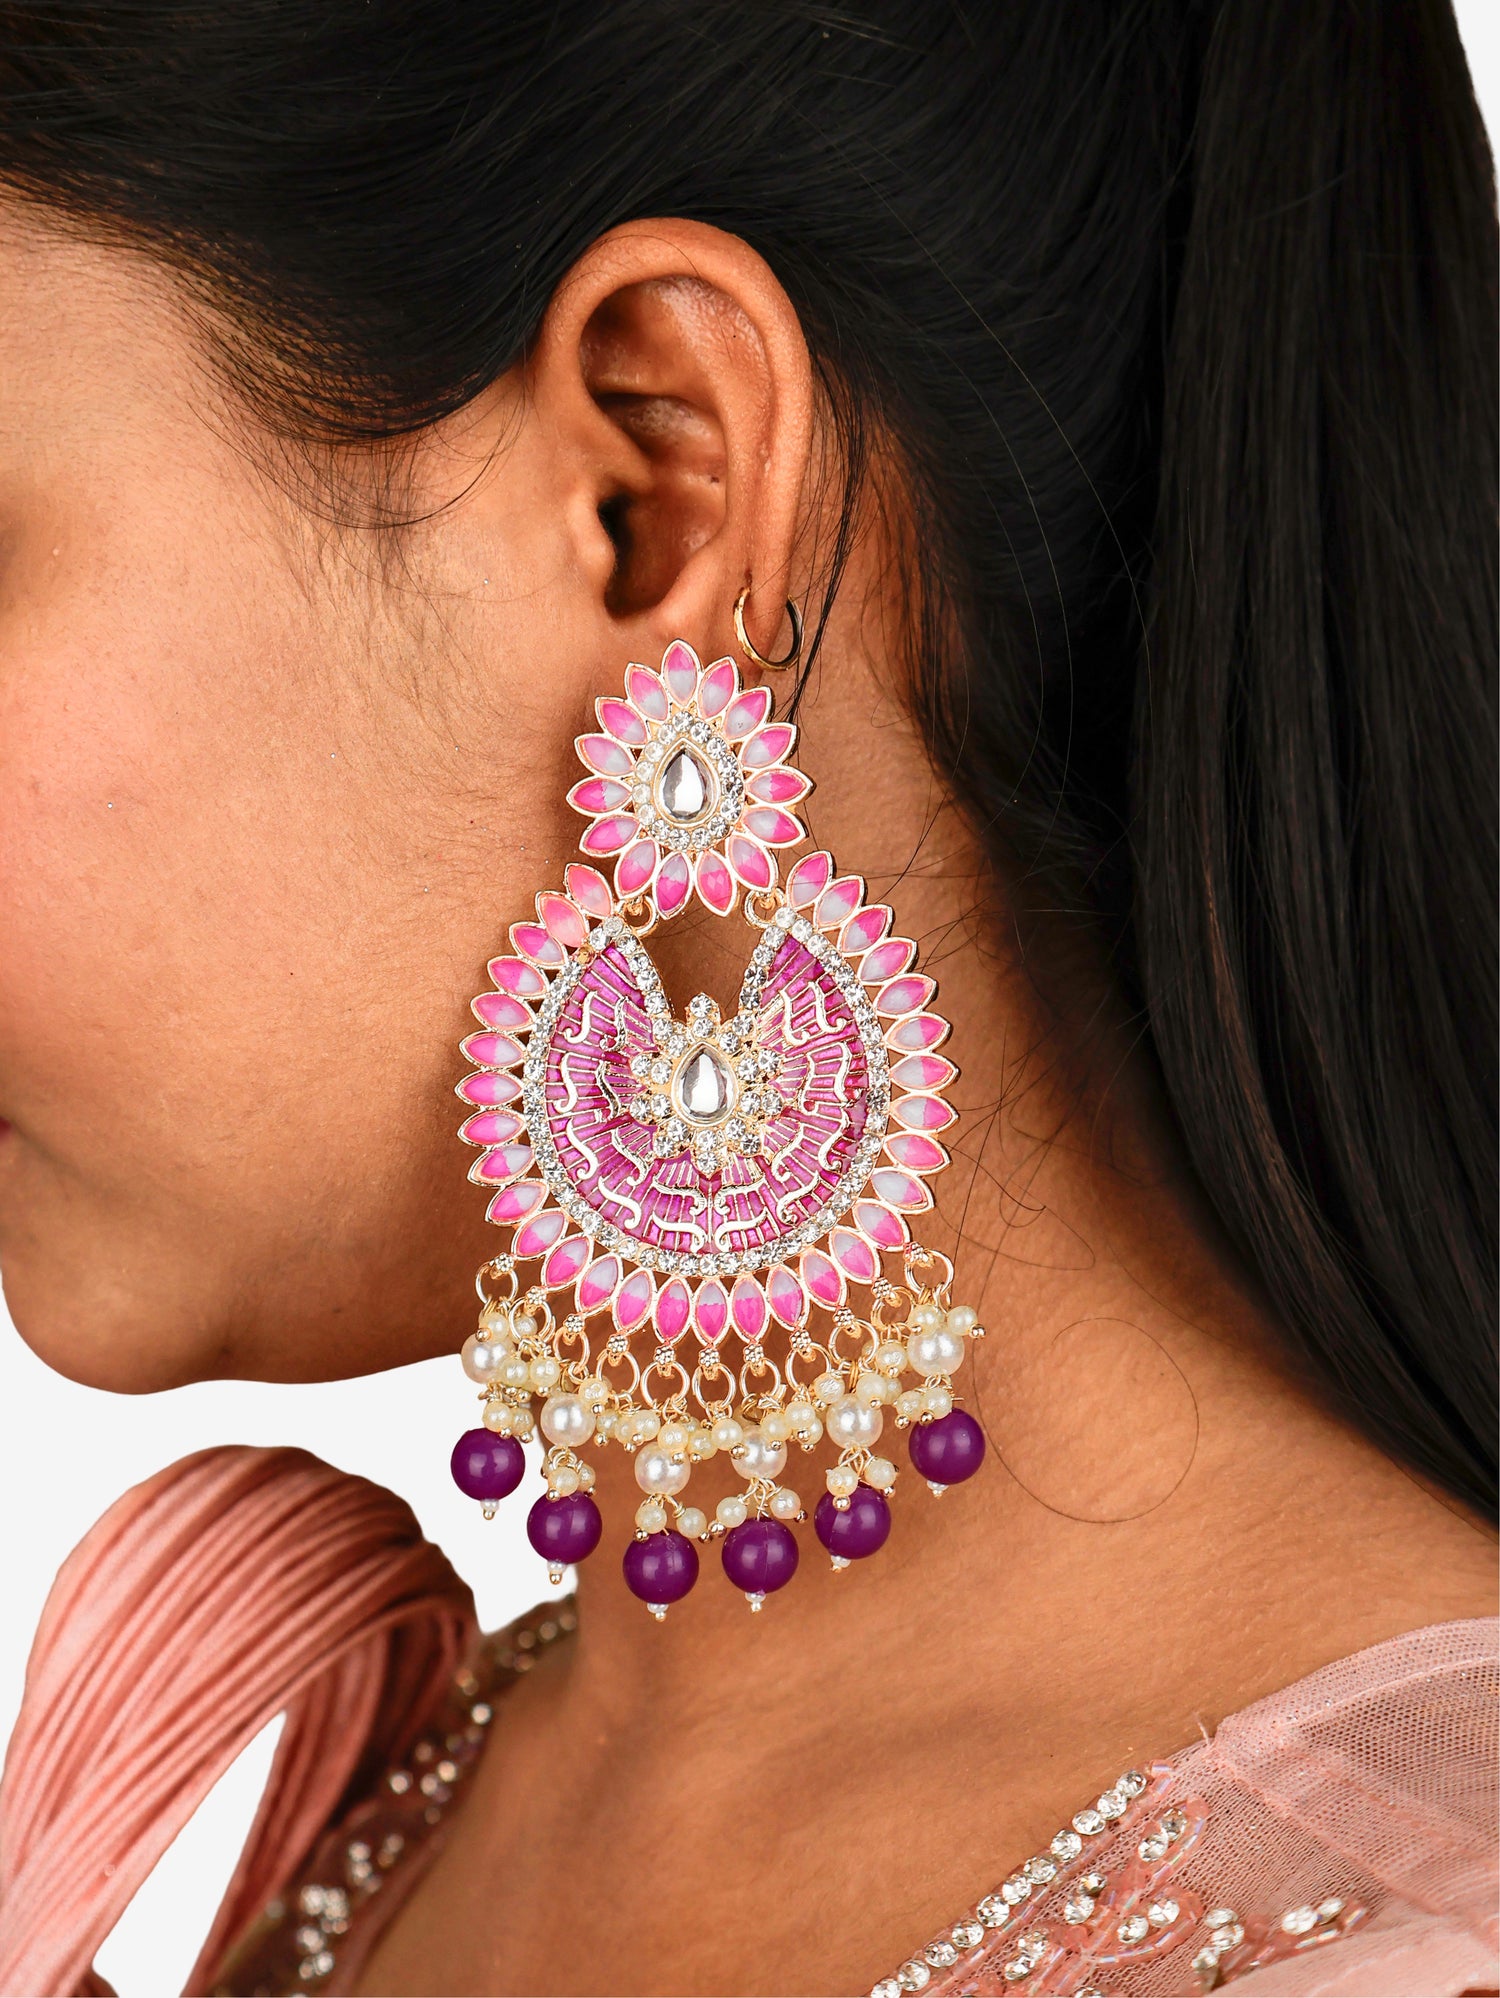 Delicate Pearl &amp; Rhinestone Chandelier Earrings for Women by Shreekama Purple Fashion Jewelry for Party Festival Wedding Occasion in Noida